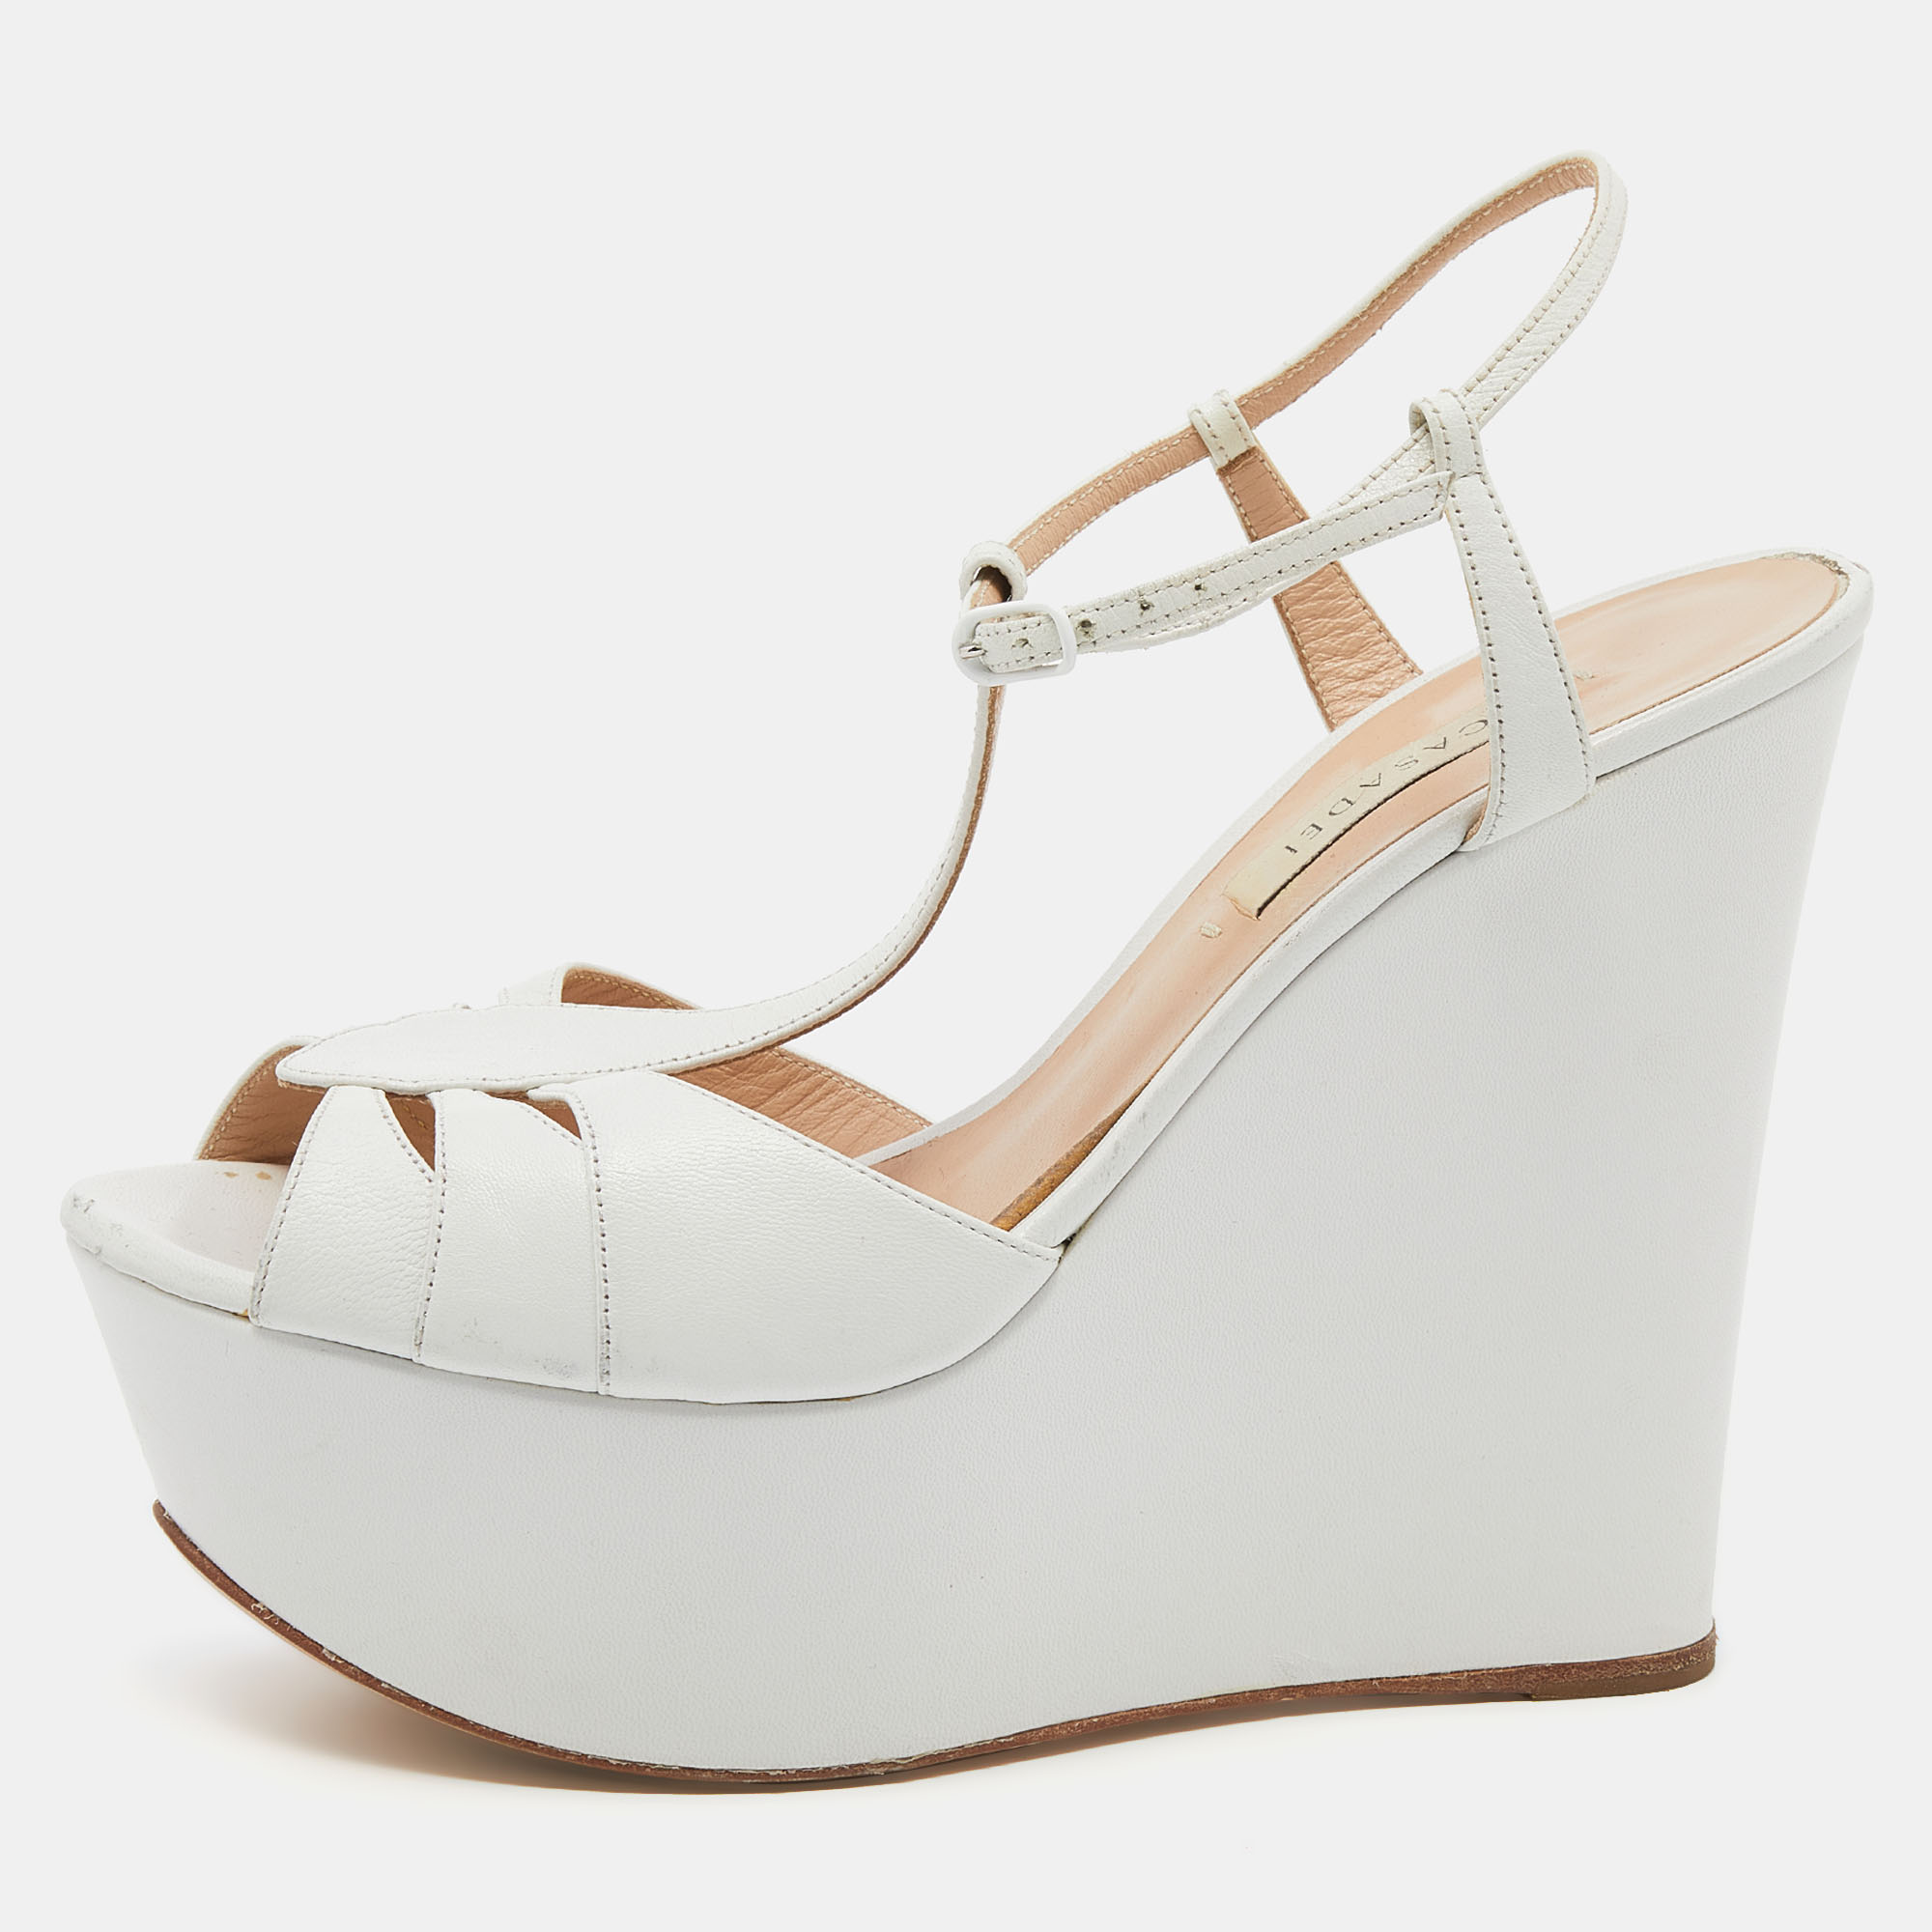 Casadei white leather wedge platform t-strap sandals size 38